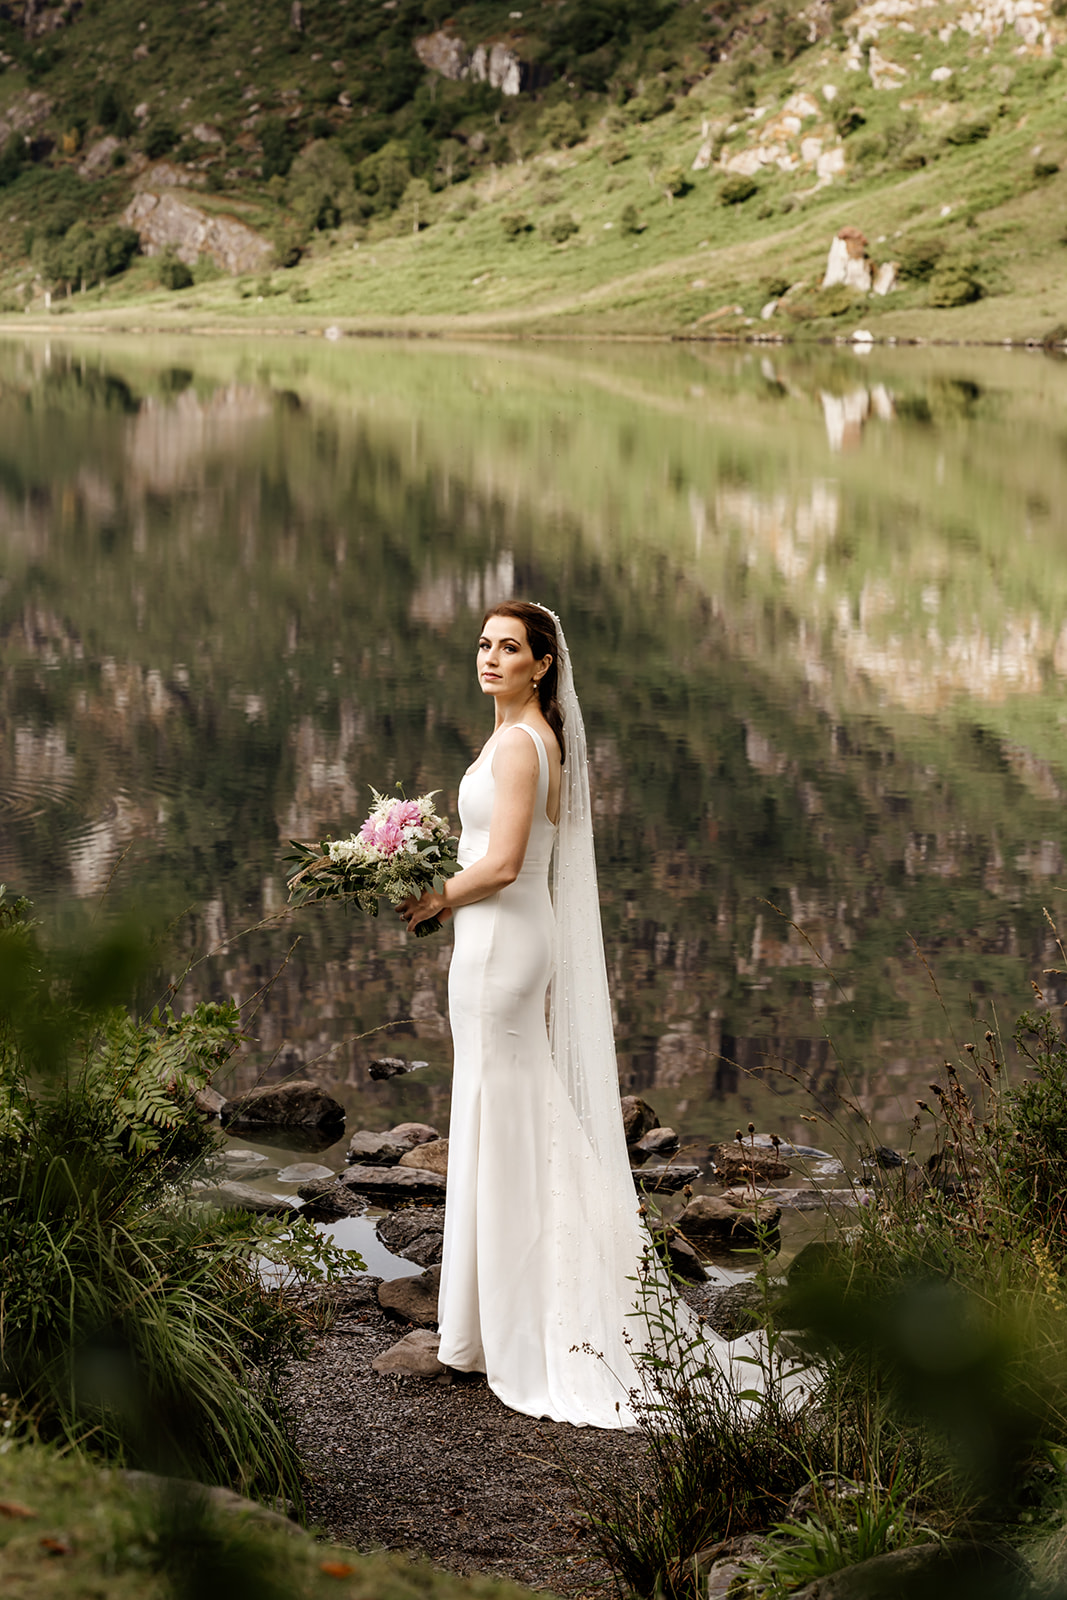 Gougane Barra wedding | Gougane Barra Wedding Venue | Destination Wedding Ireland | Cork Wedding Photographer 